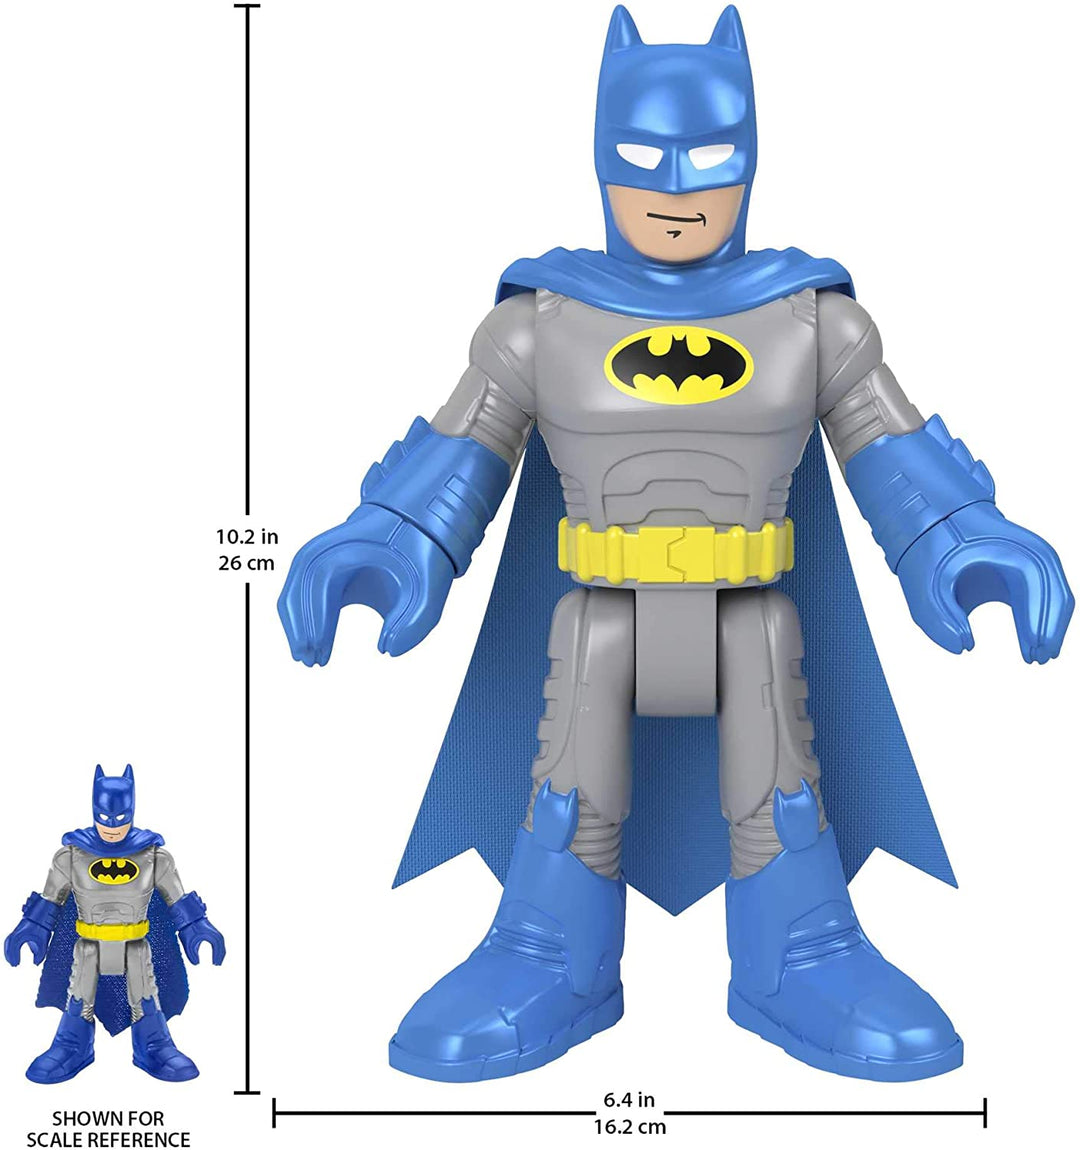 Fisher-Price Imaginext DC Super Friends Batman XL - Blauw